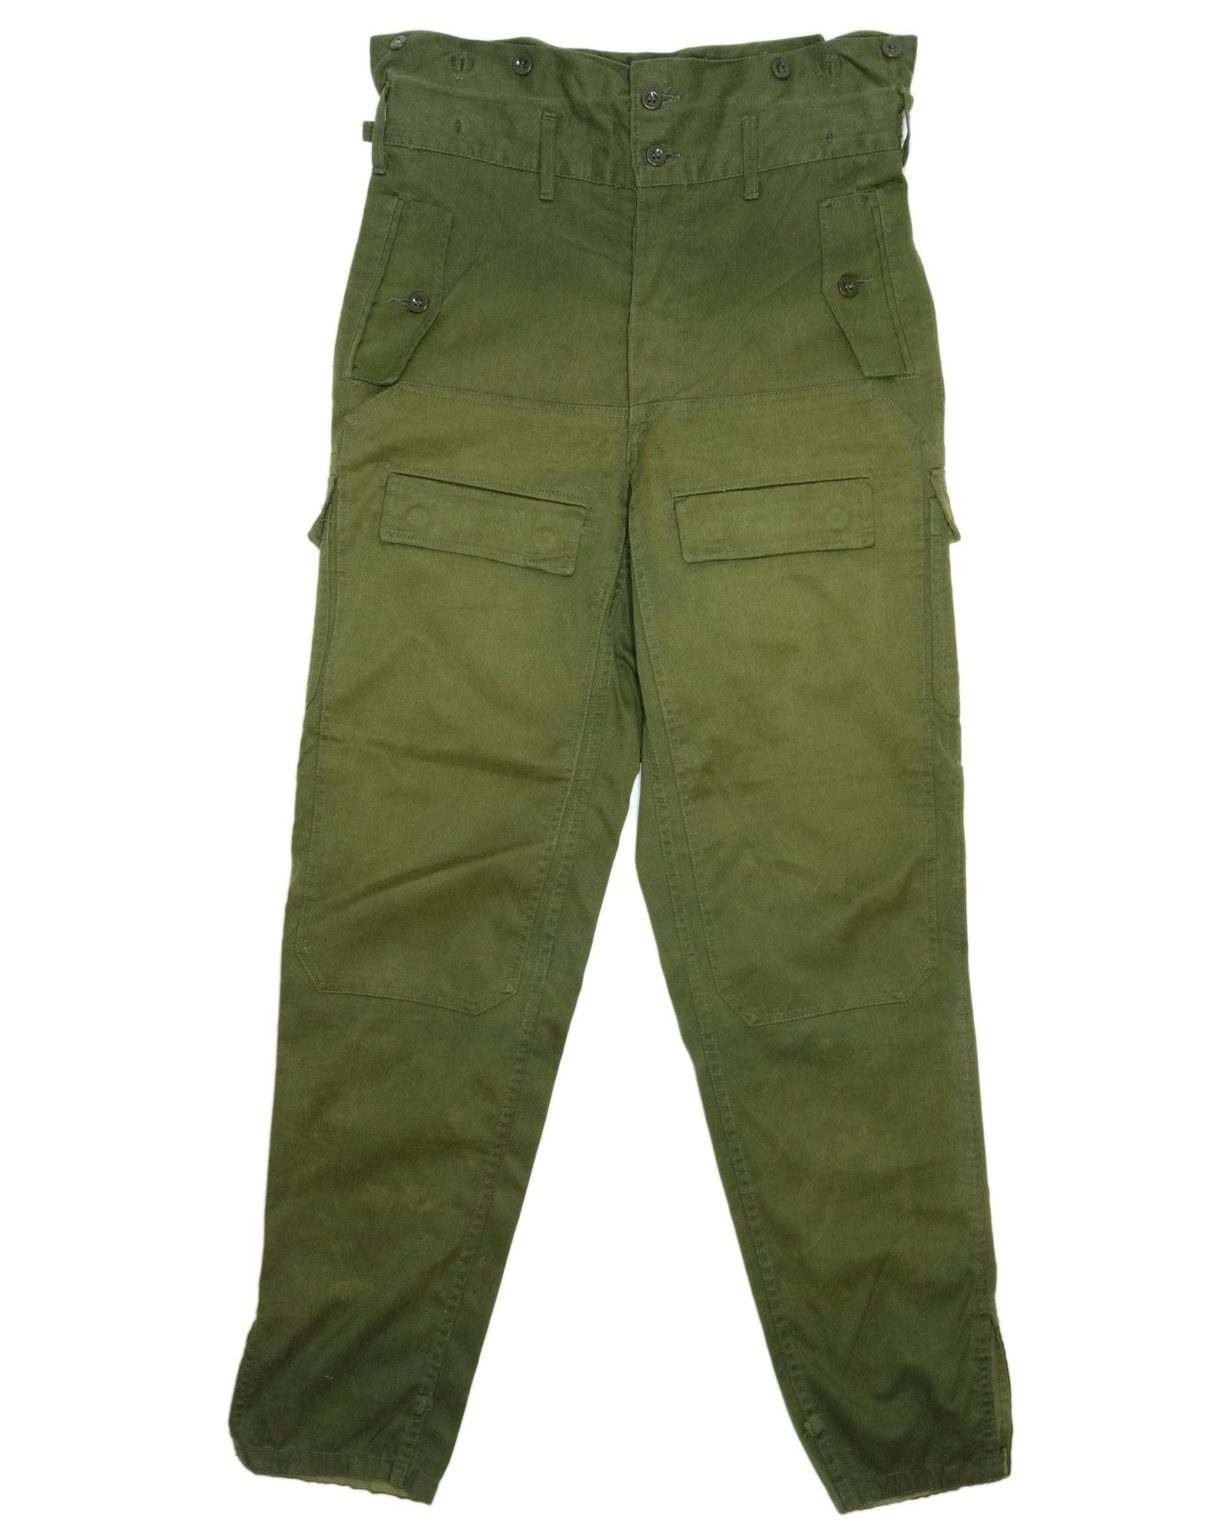 Czech army surplus olive green m85 field combat trousers BDU - Surplus ...